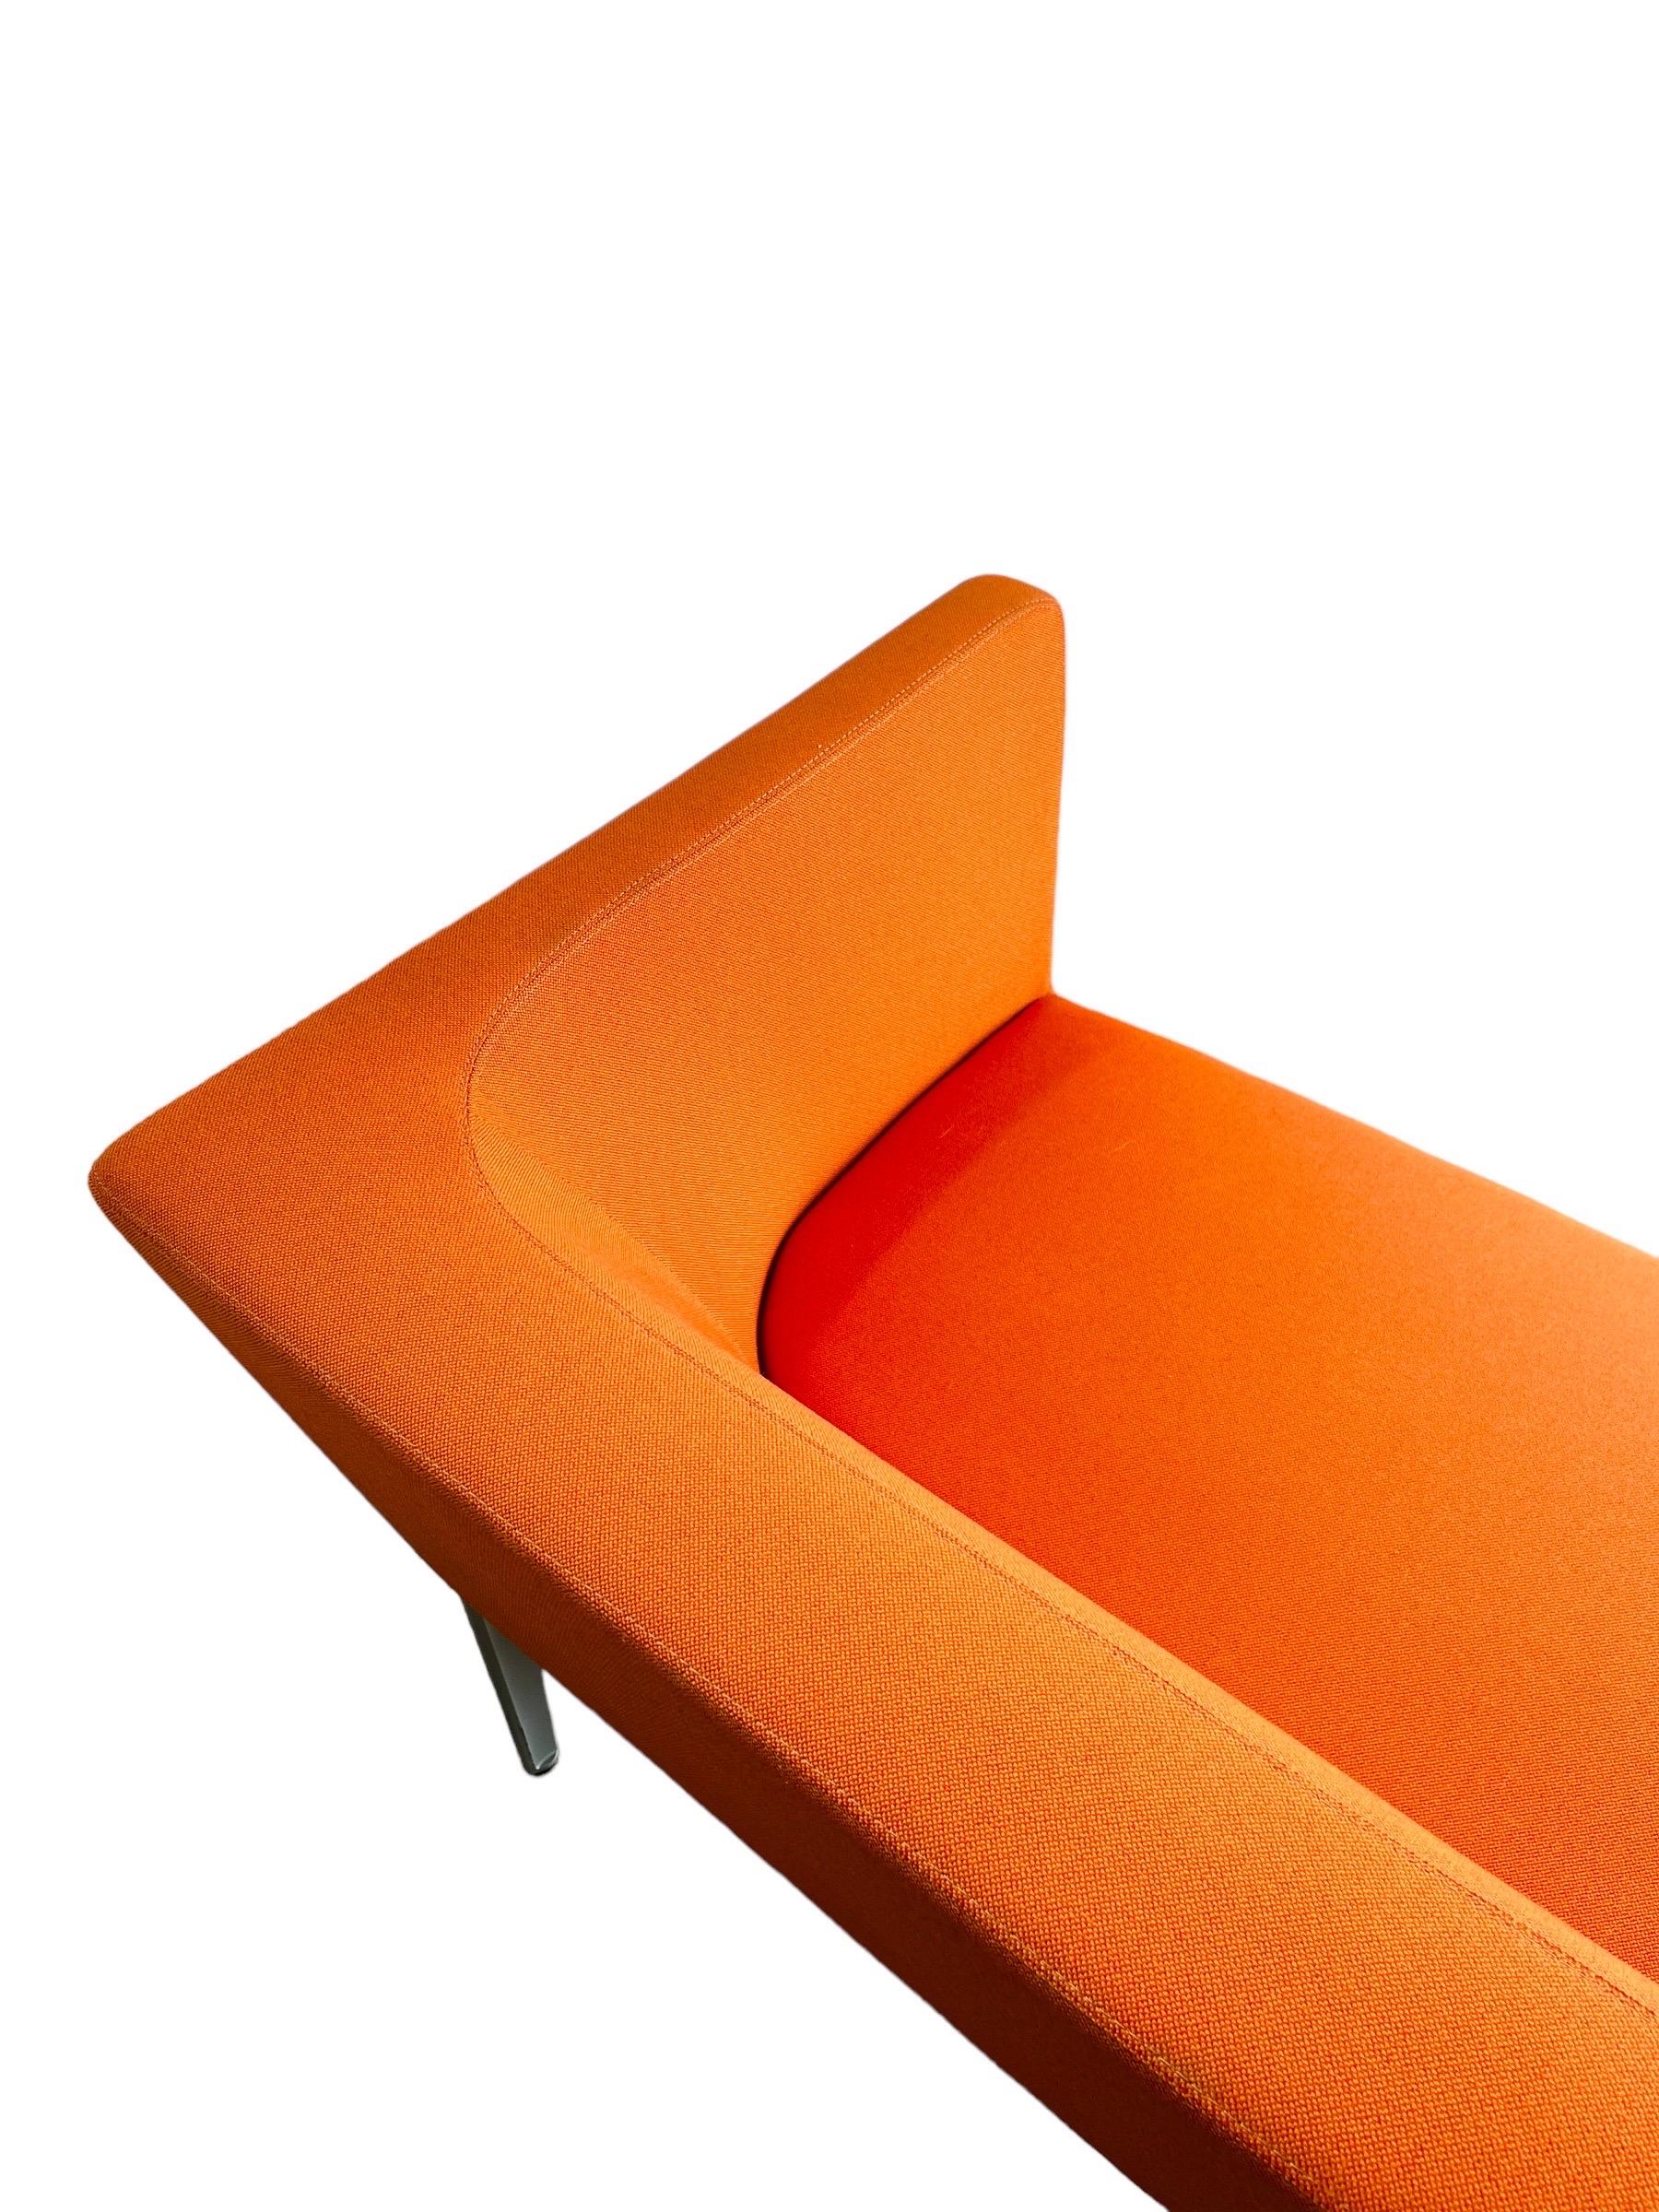 Steelcase Bivi Rumble Seat Collection: Vibrant Orange Modern Sofa 8